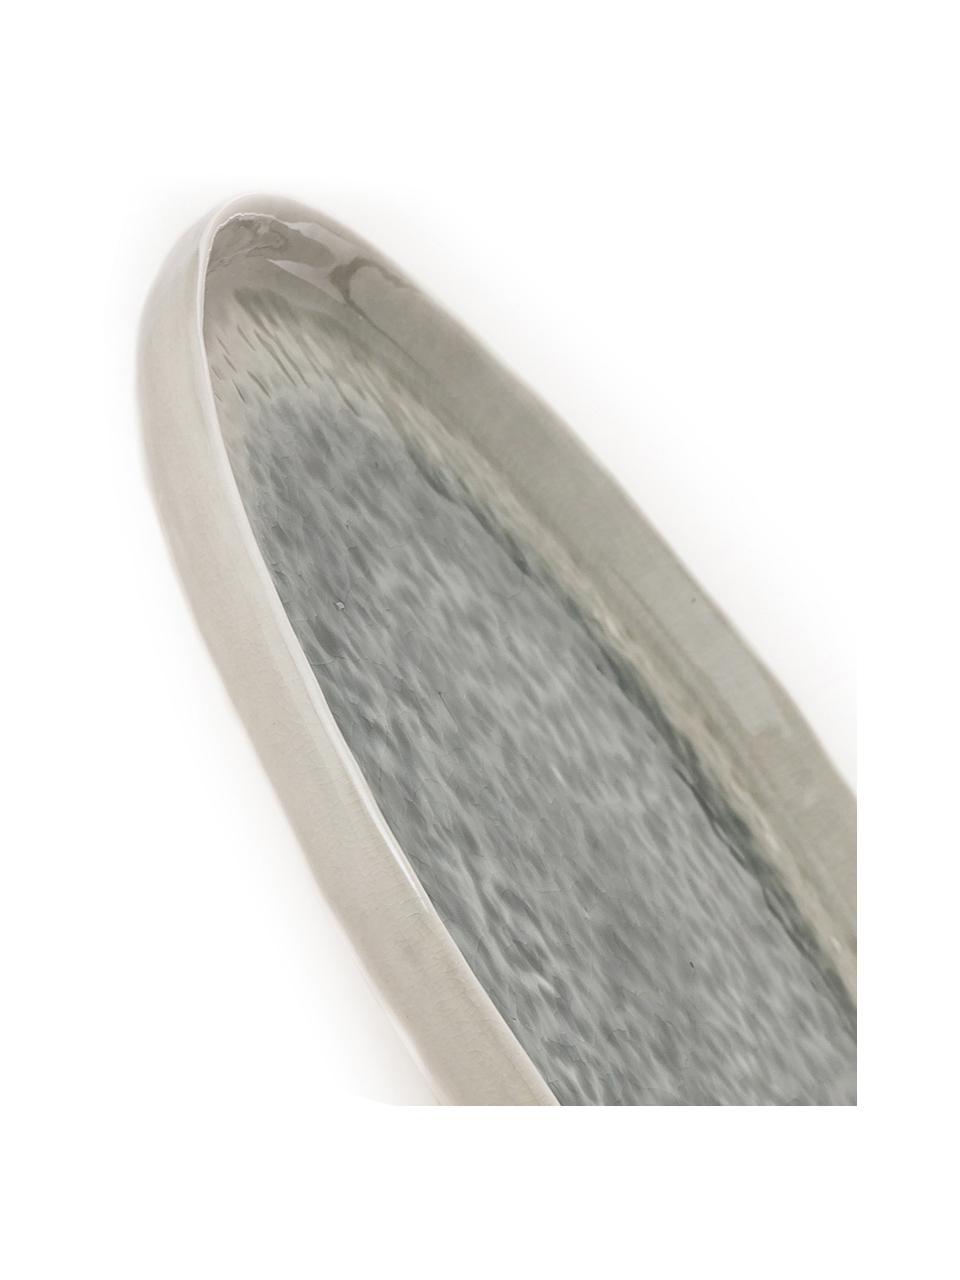 Platos postre Porcelino Sea, 6 uds., Porcelana, Beige, gris verdoso, Ø 21 cm